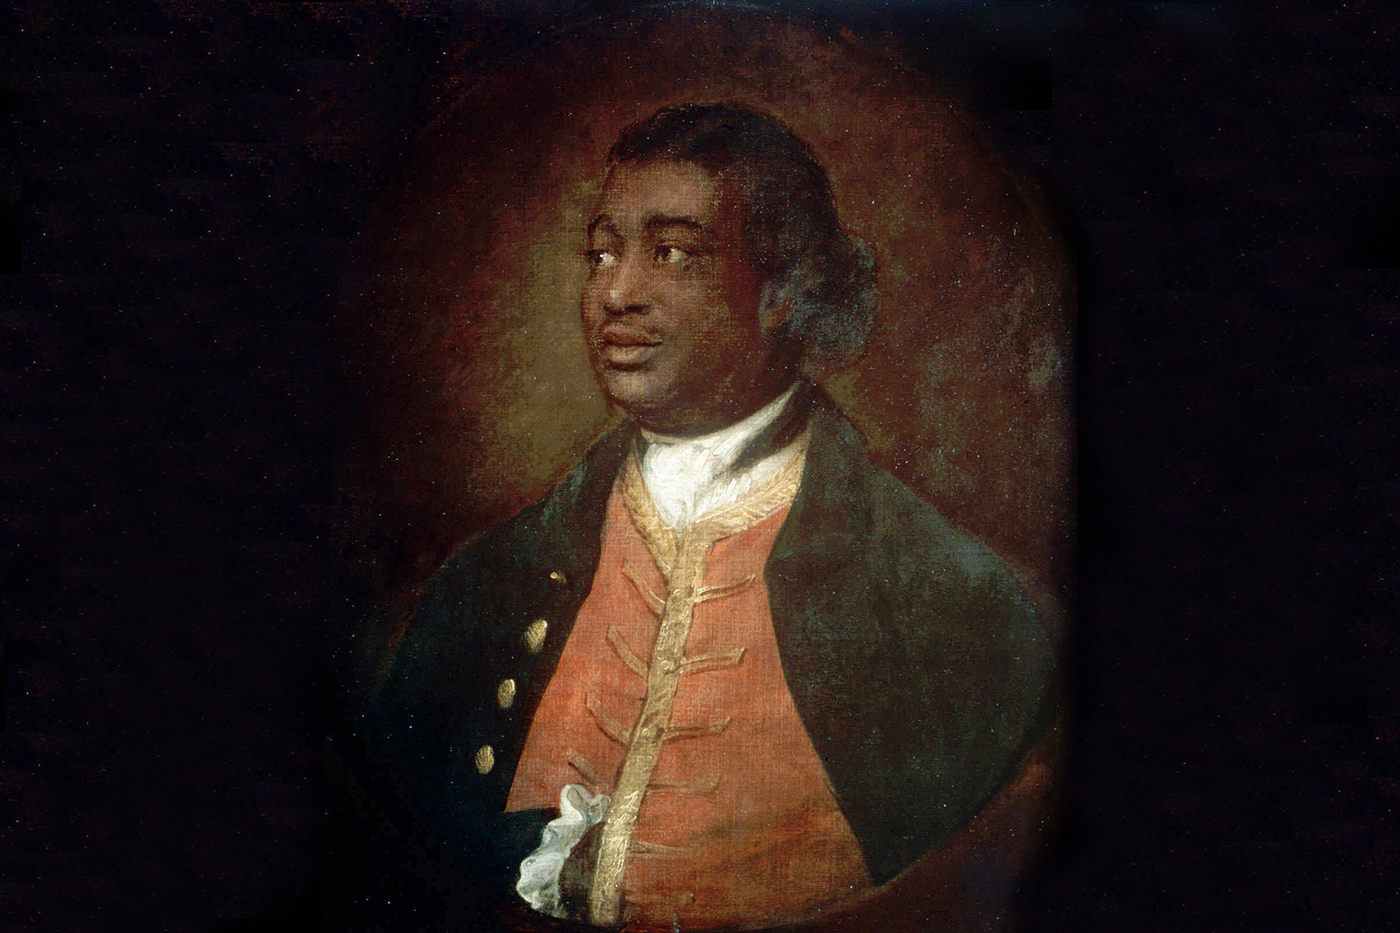 painted portrait of 18th century black man